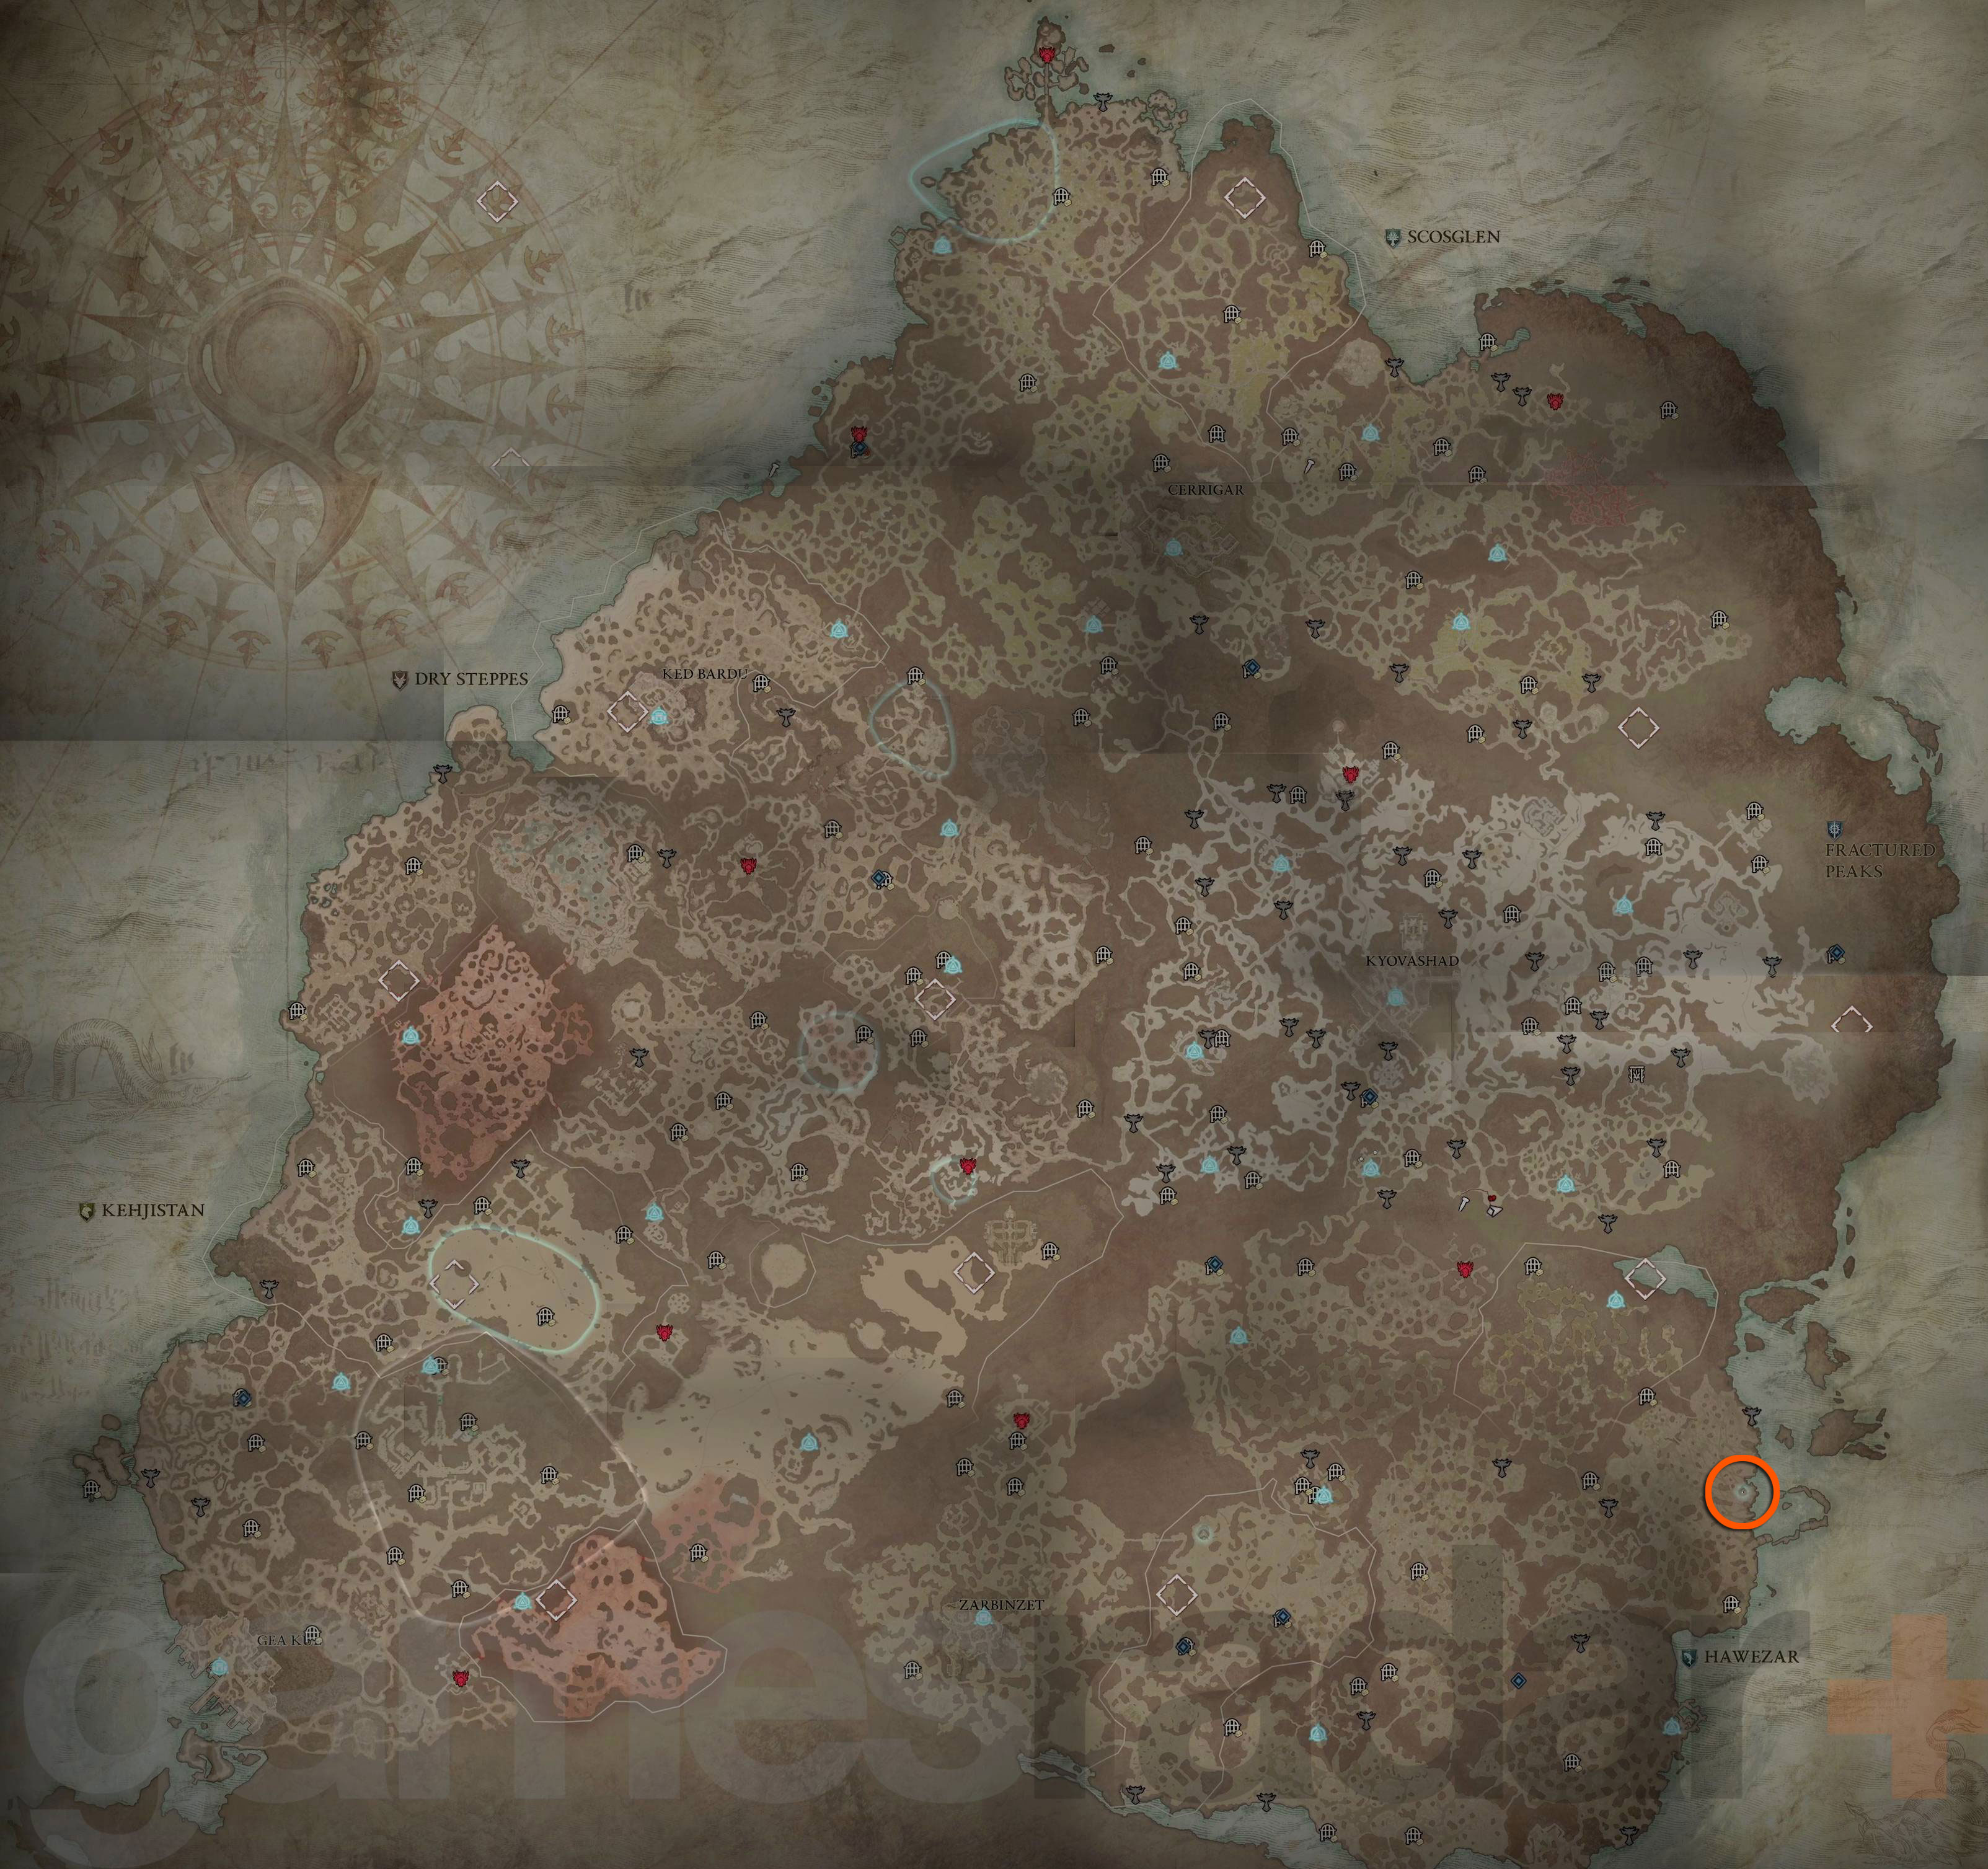 Diablo 4 Traveler's Superstition plats visas på kartan